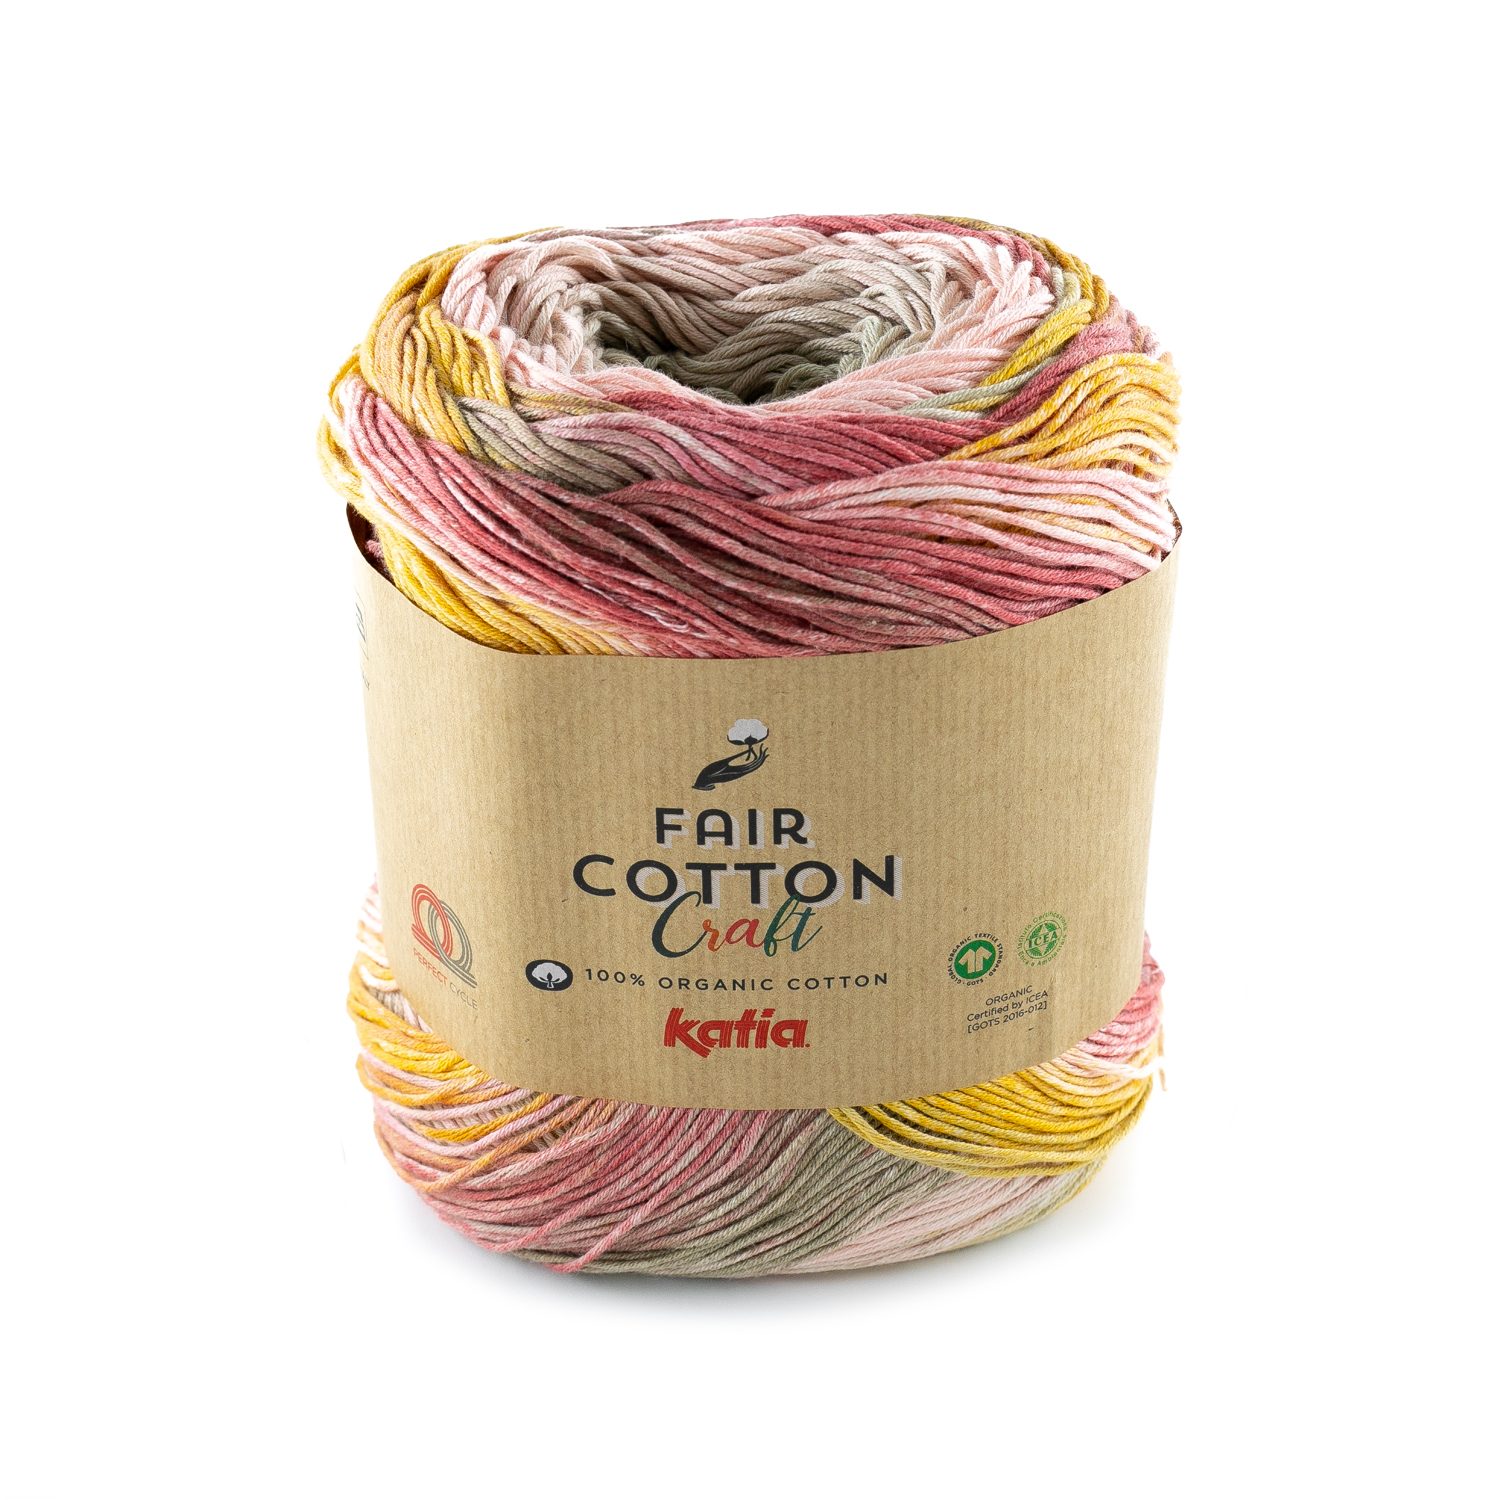 yarn-wool-faircottoncraft-knit-cotton-stone-grey-coral-ochre-spring-summer-katia-601-g